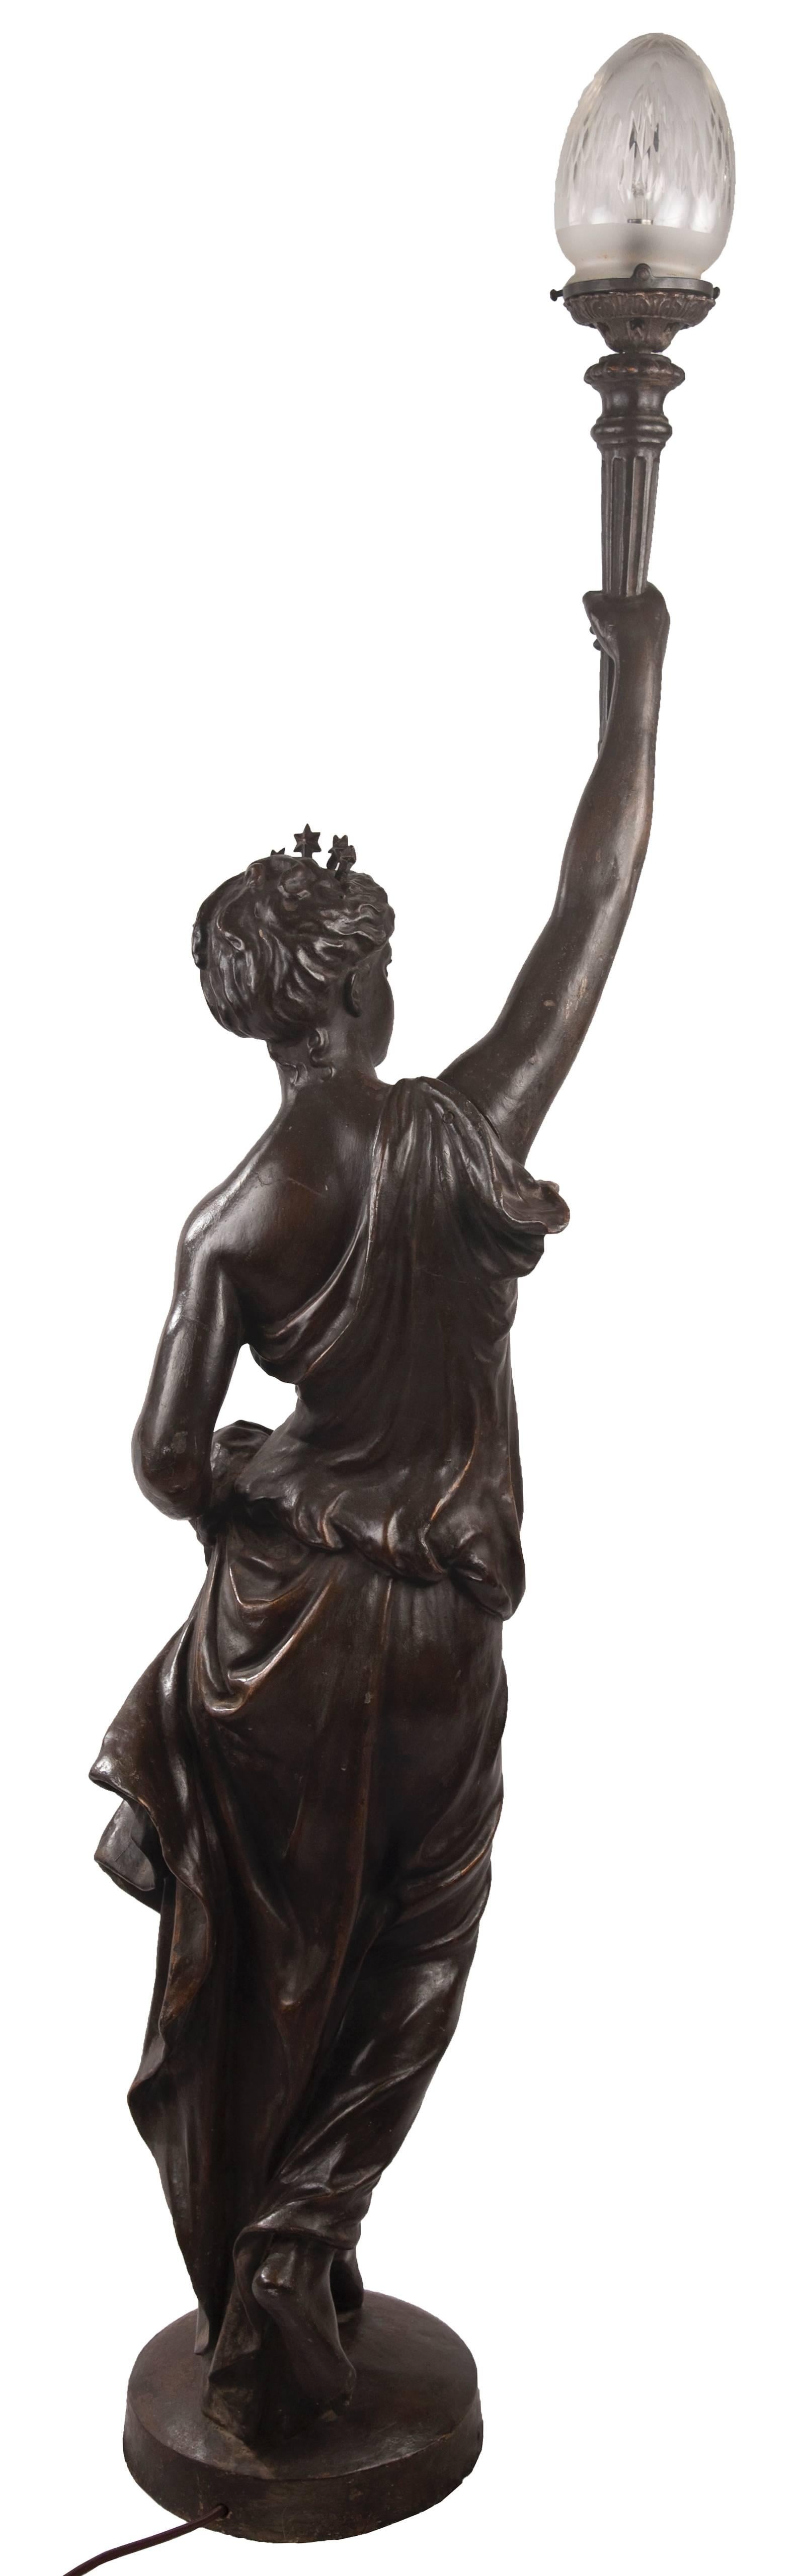 statue of liberty lamp